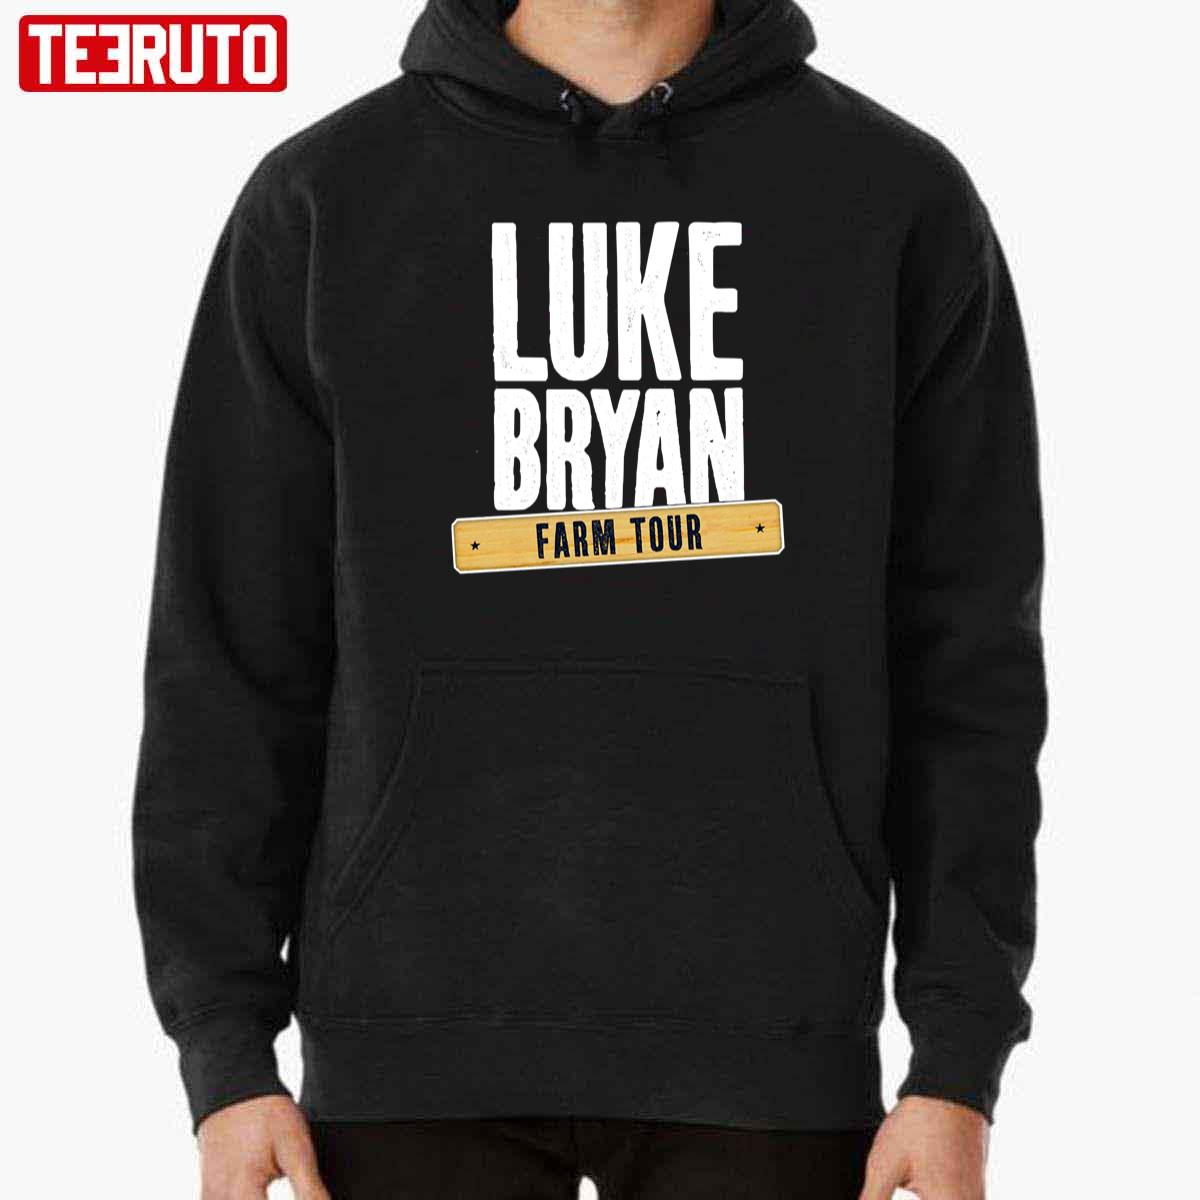 Luke Bryan Farm Tour 2021 Unisex Hoodie